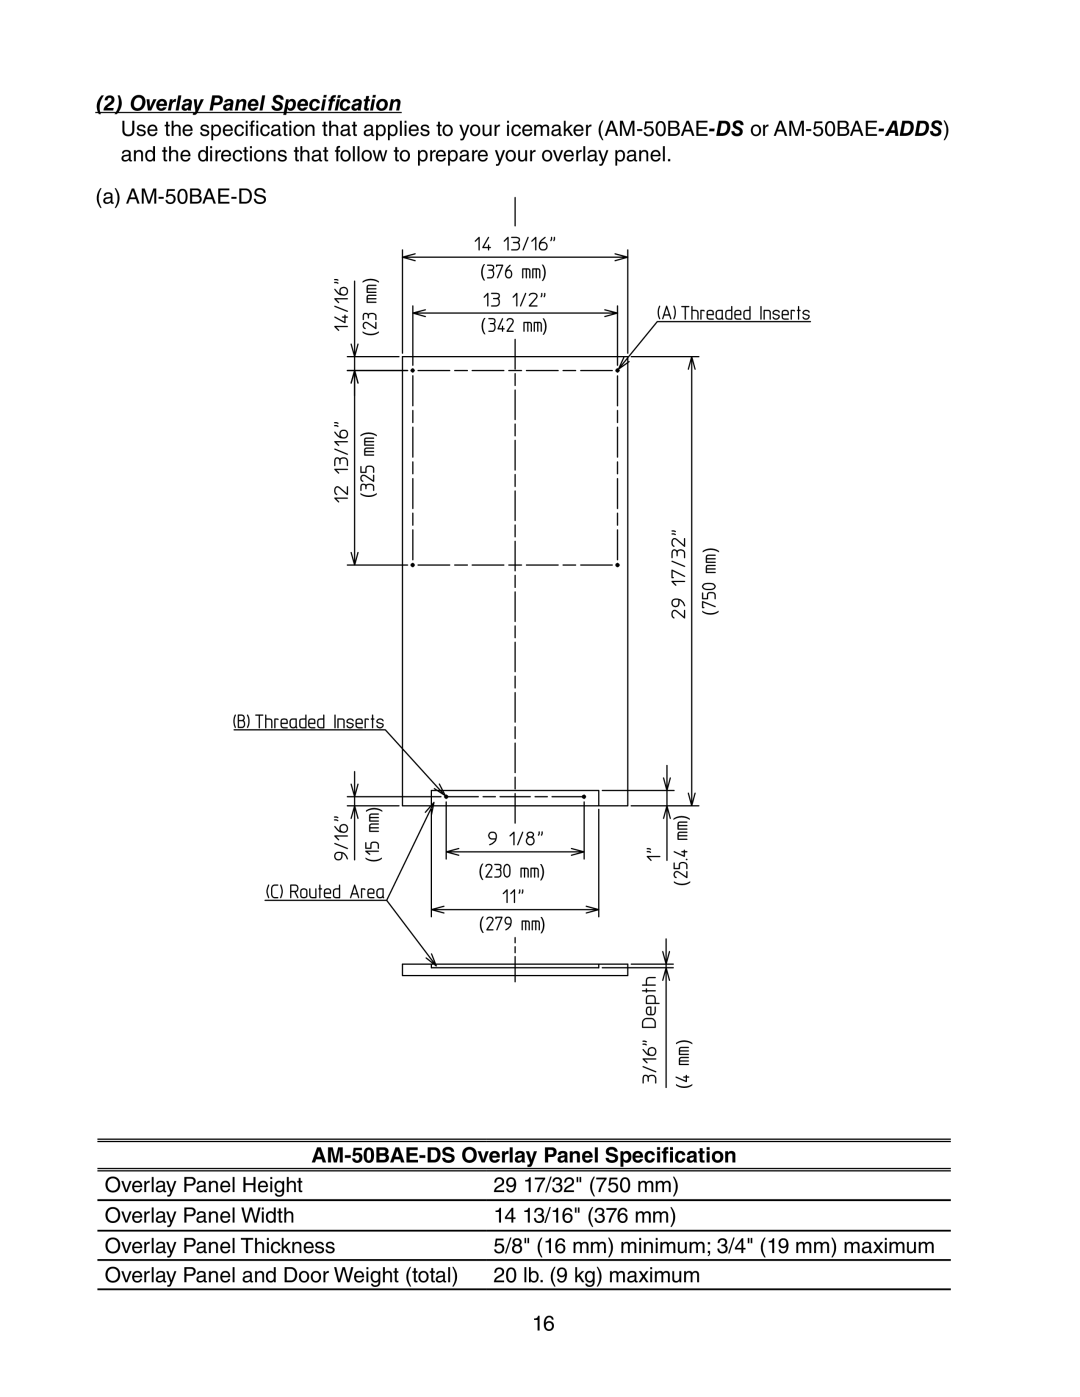 Hoshizaki AM-50BAE-ADDS instruction manual AM-50BAE-DSOverlay Panel Specification 